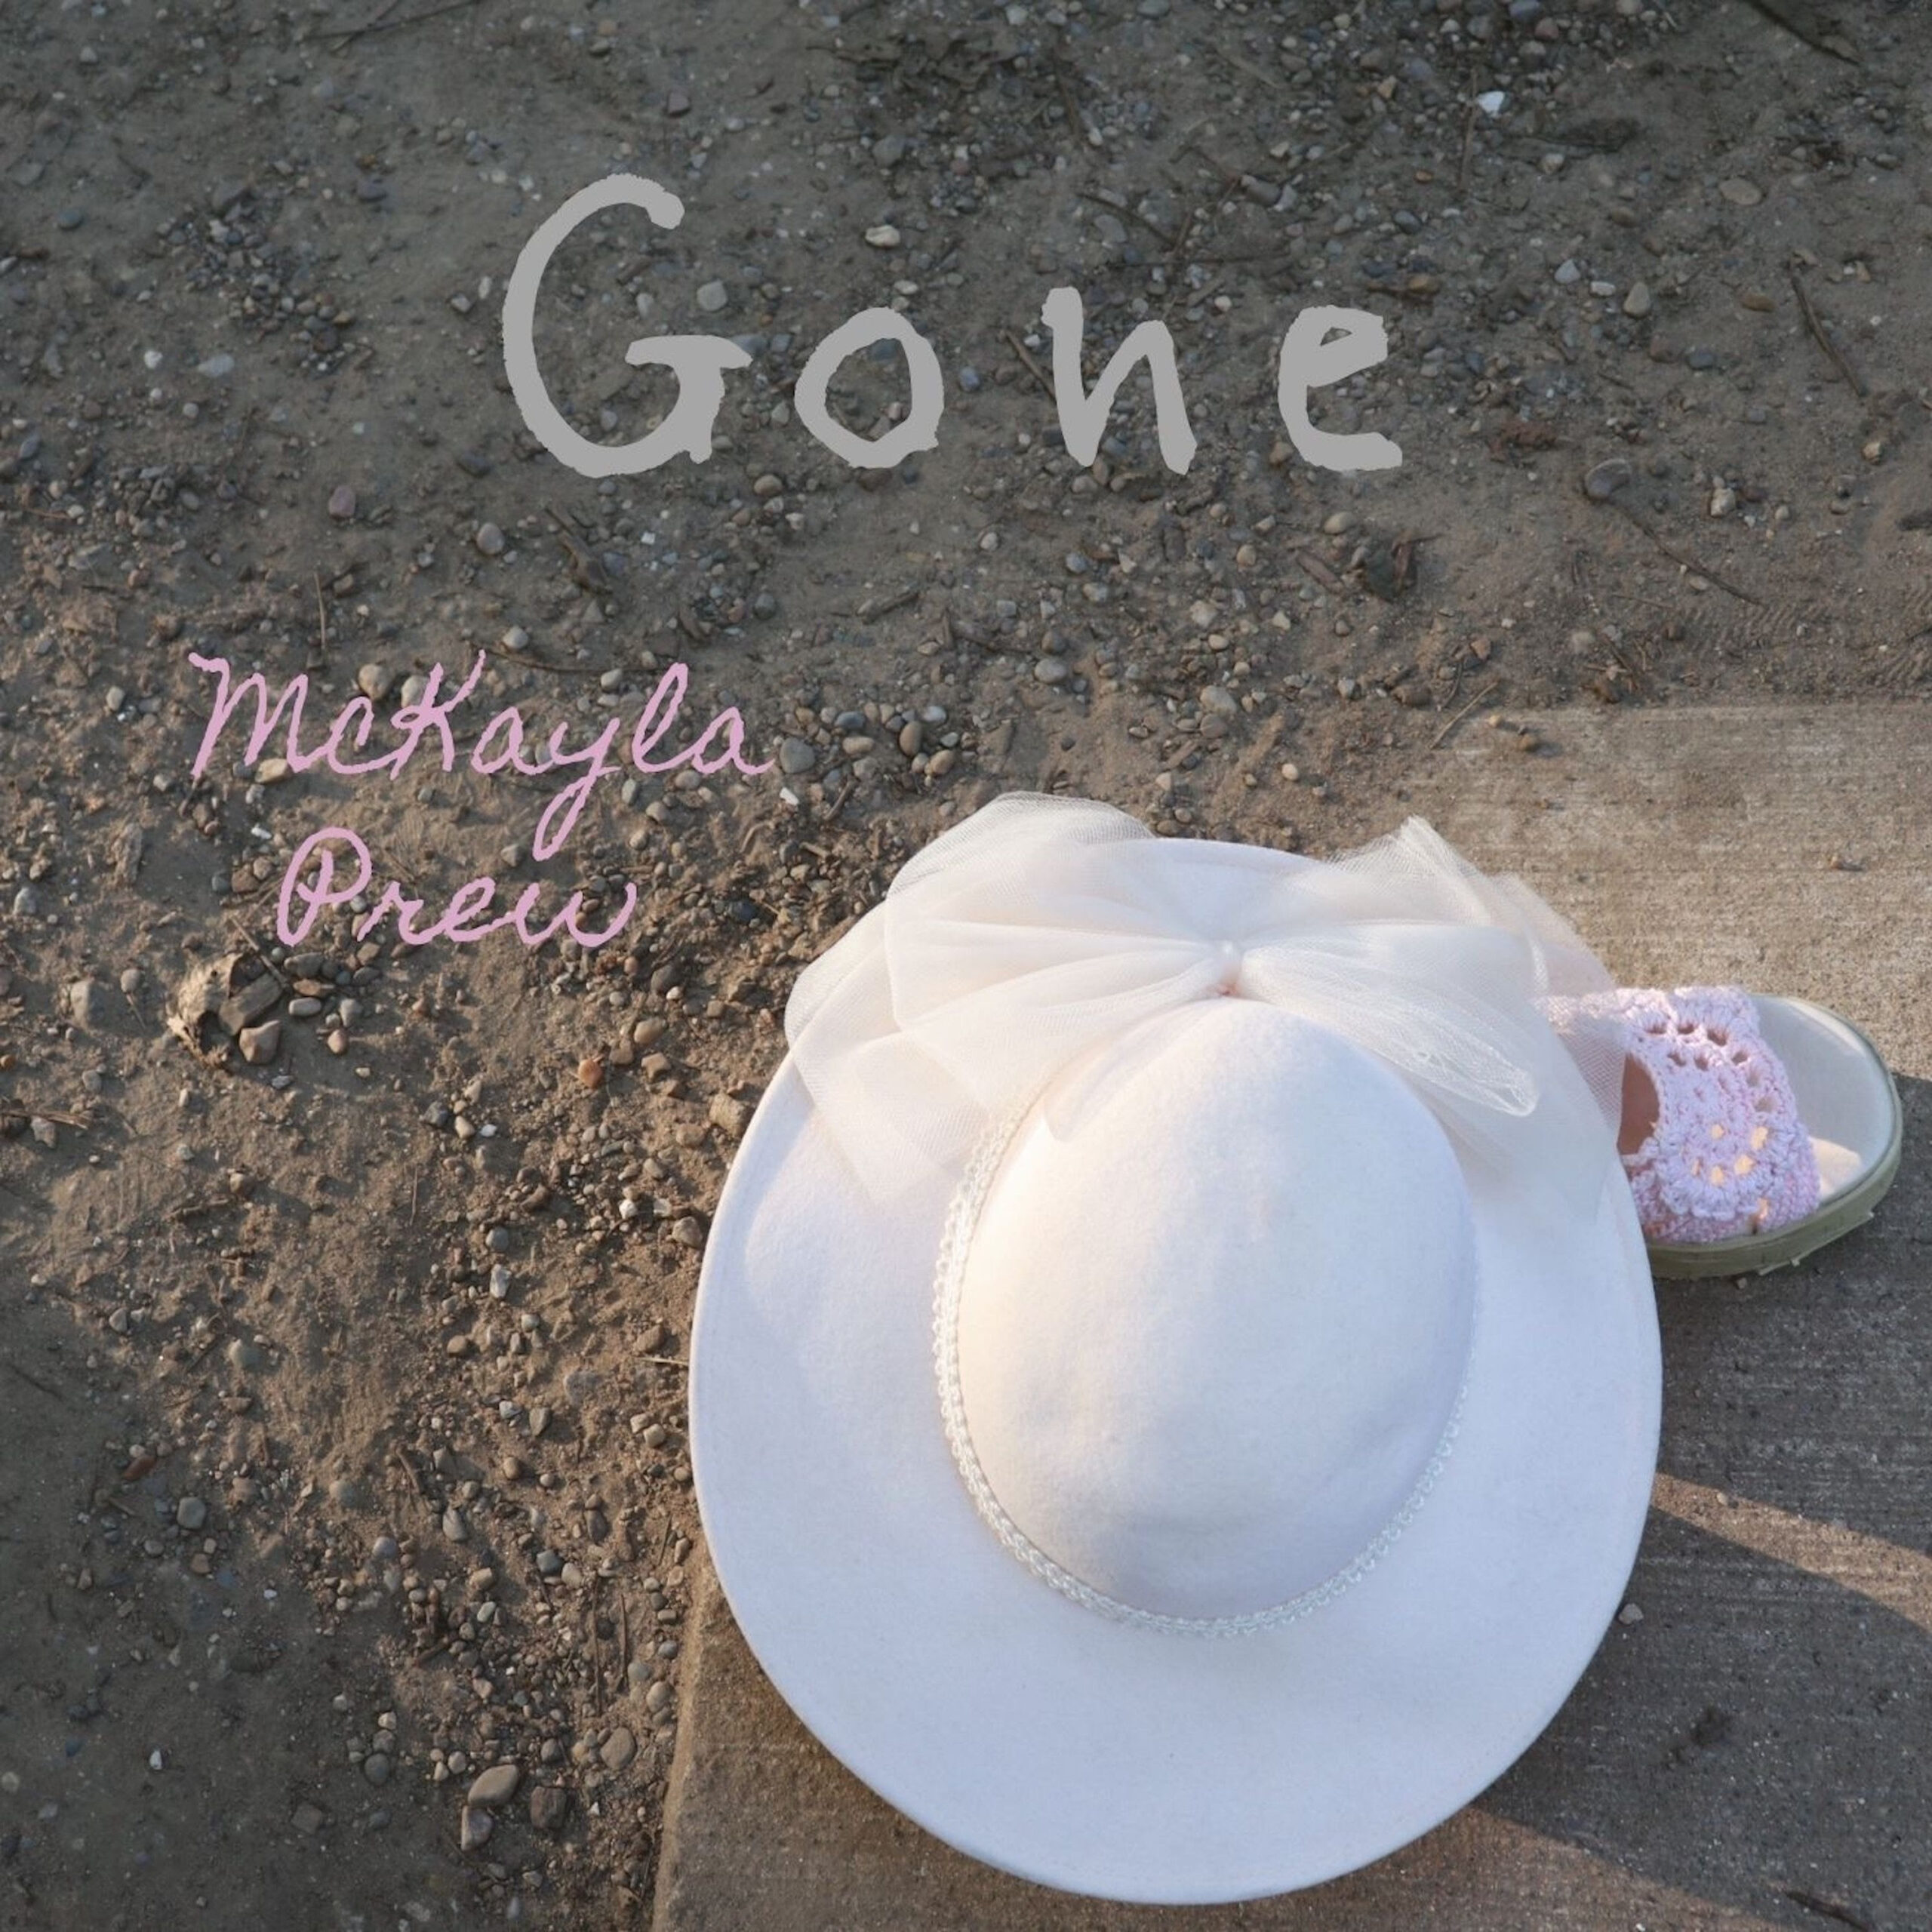 Talented Singer/Songwriter McKayla Prew Preps Album With “Gone” Release